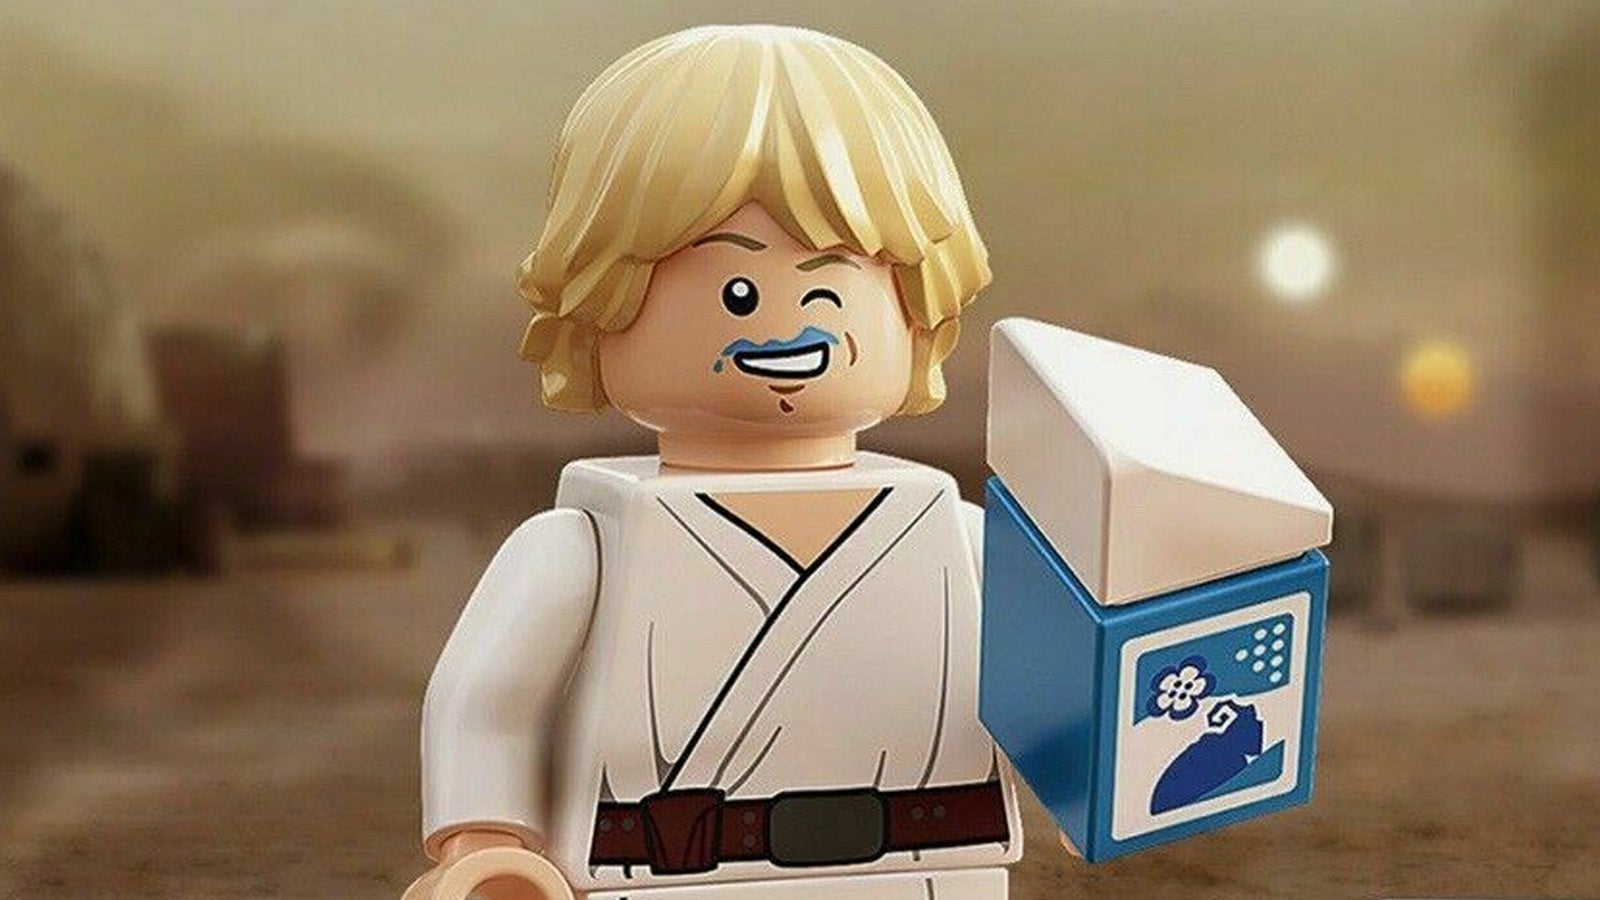 Image for Lego Star Wars scalpers target Blue Milk Luke minifigure